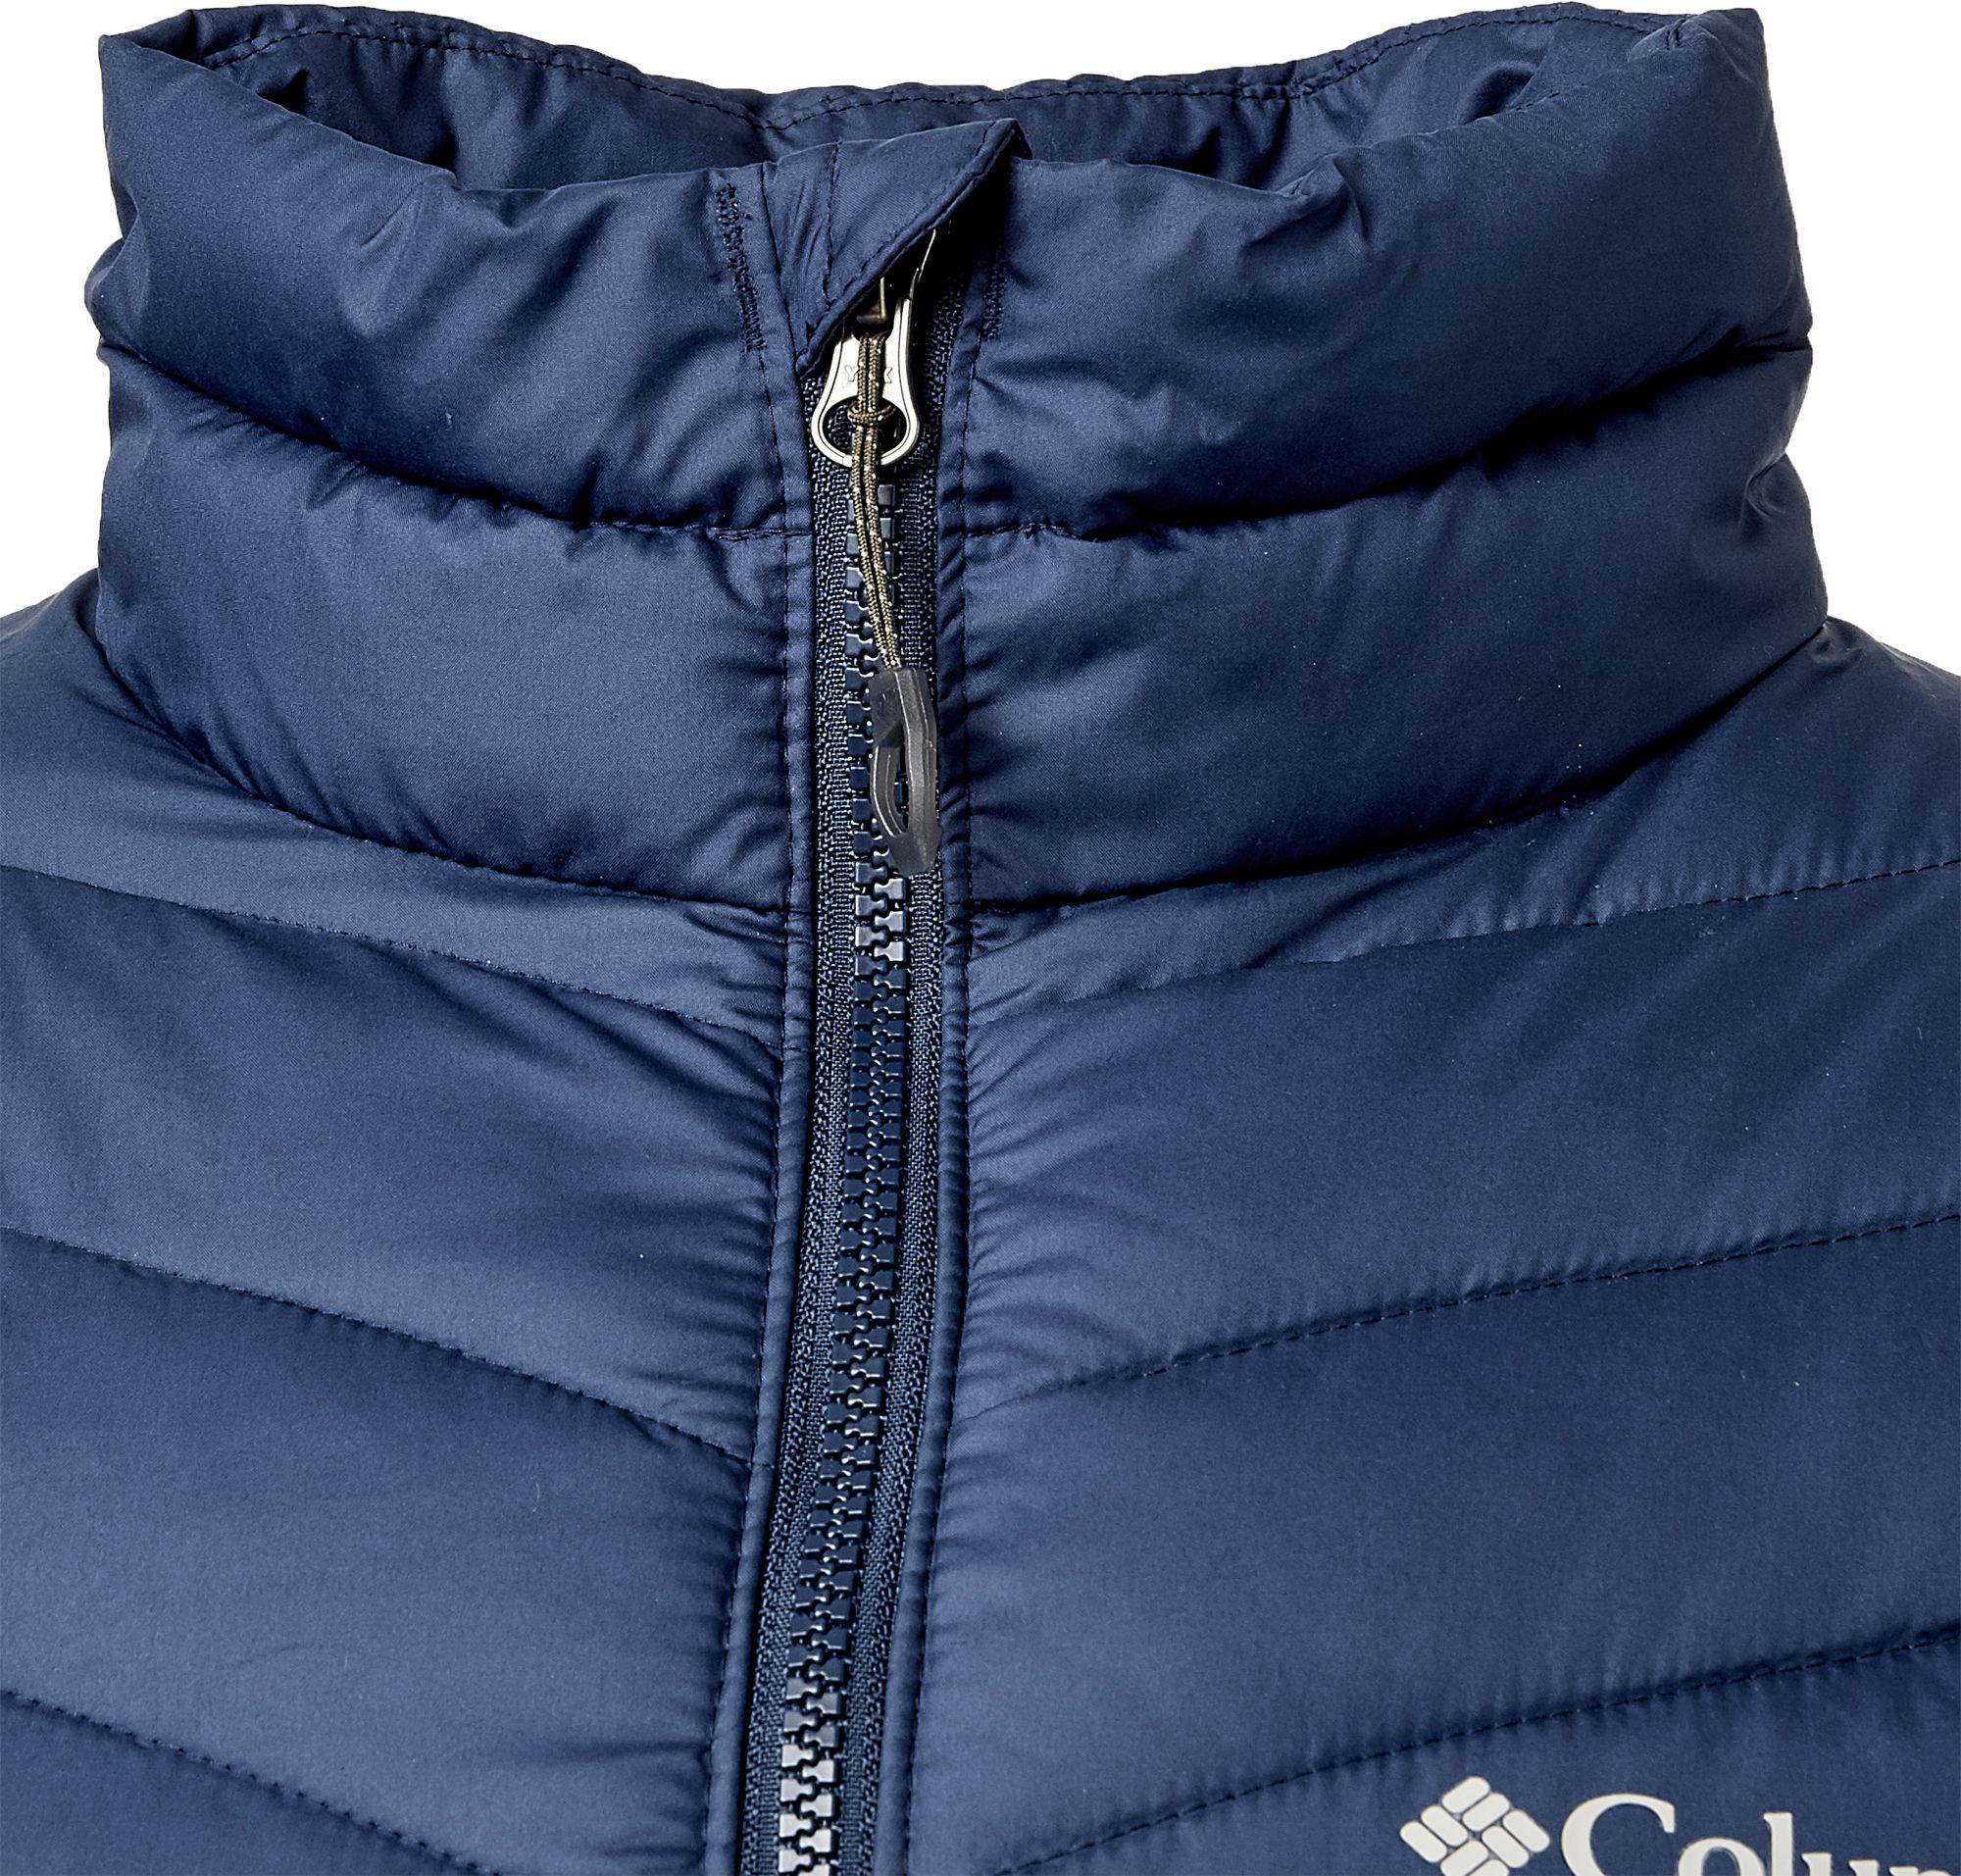 columbia titanium valley ridge jacket